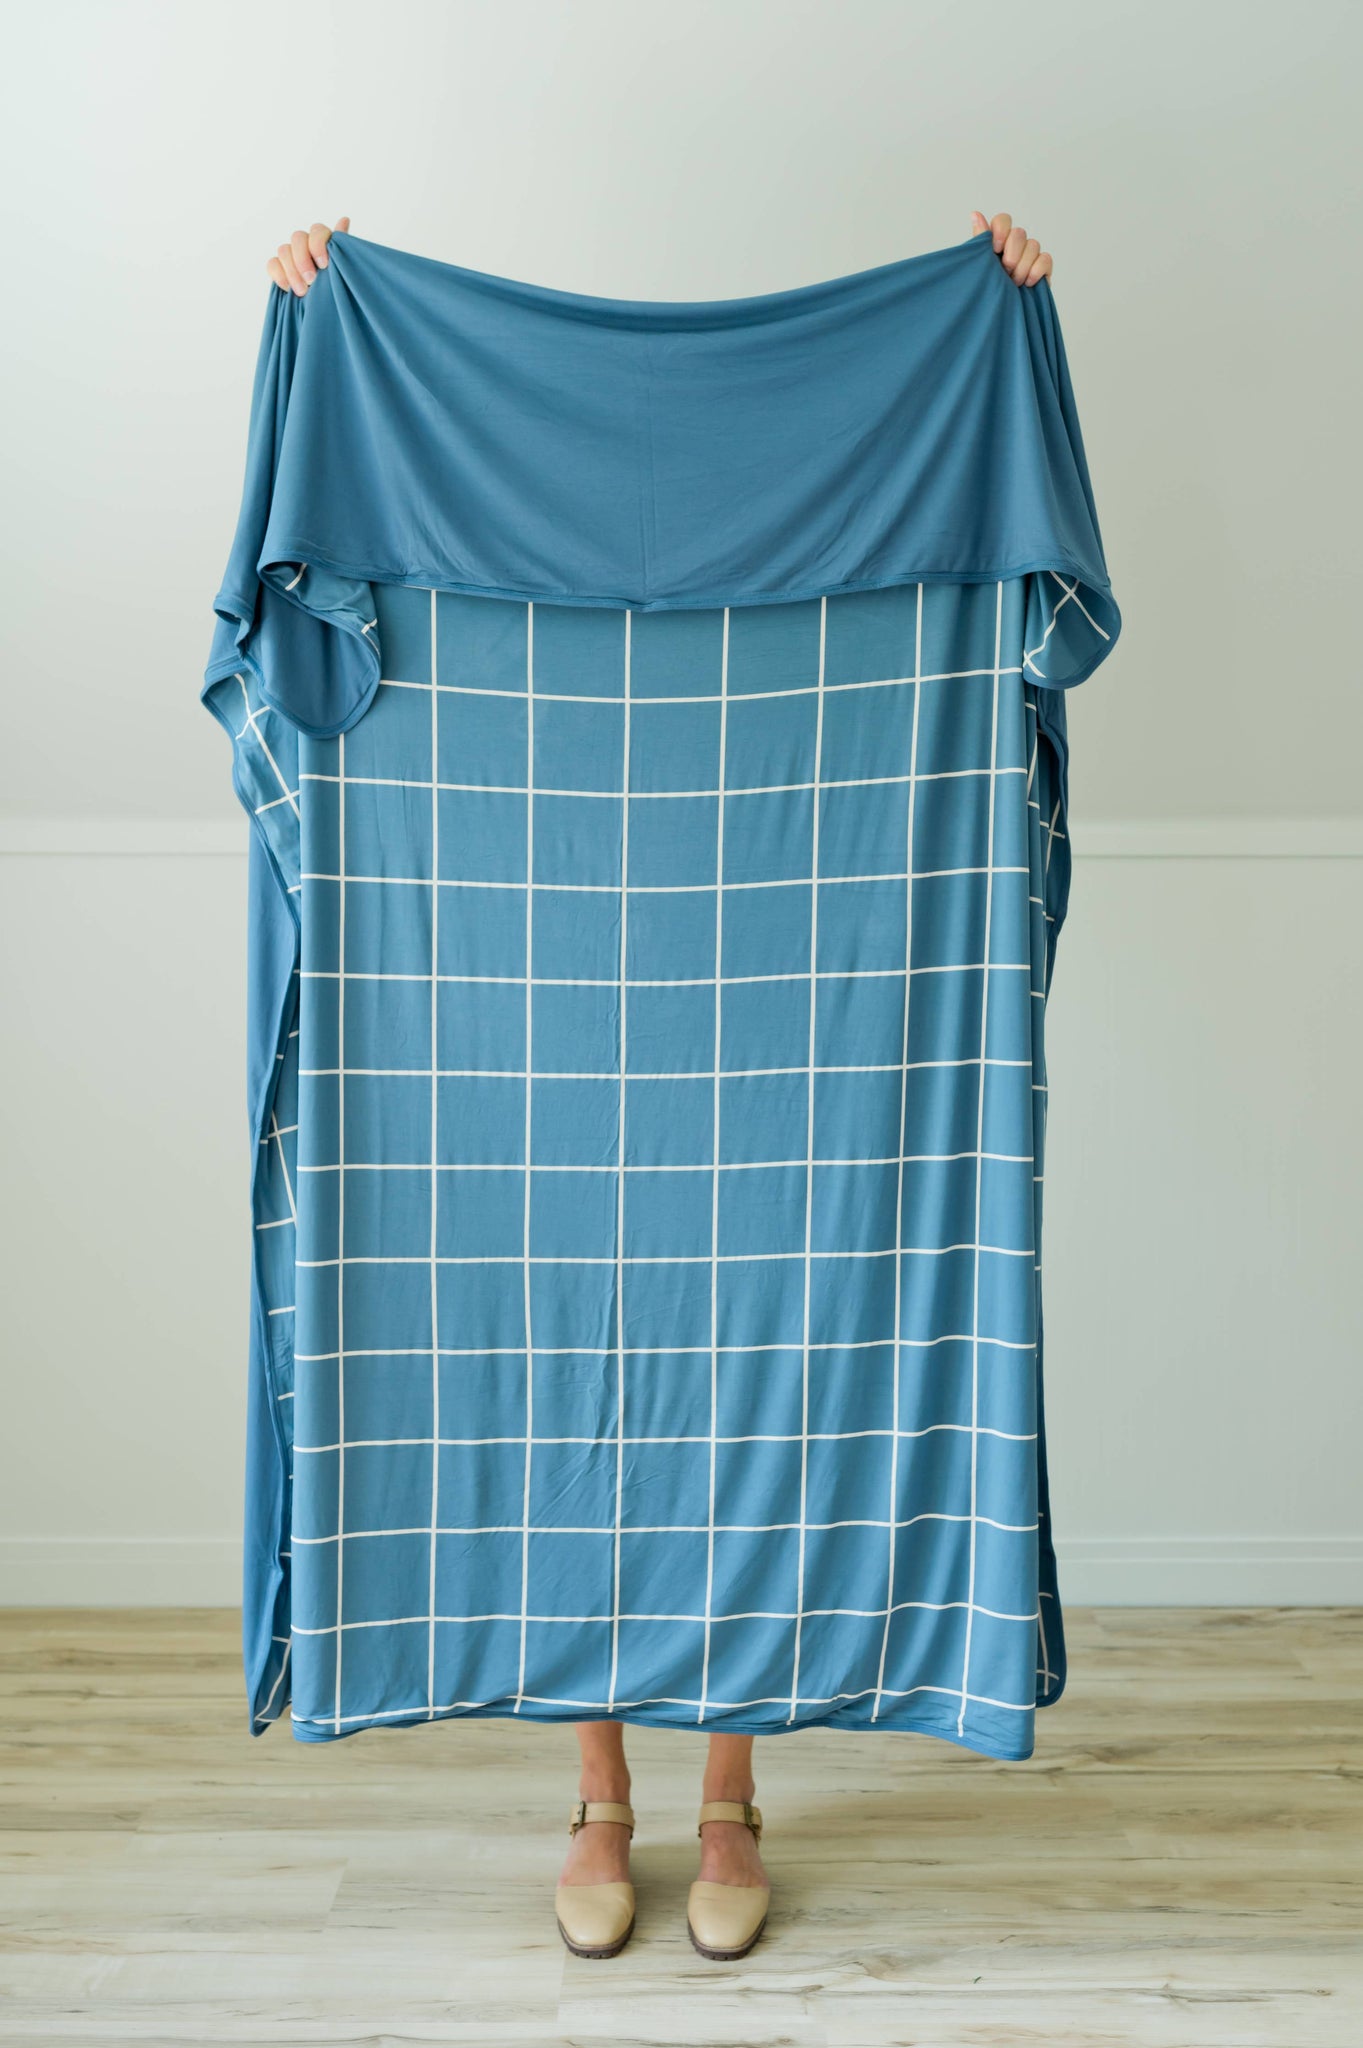 Pipermoon - Malibu Windowpane Adult Swaddle Blanket, Dorm Room Essential